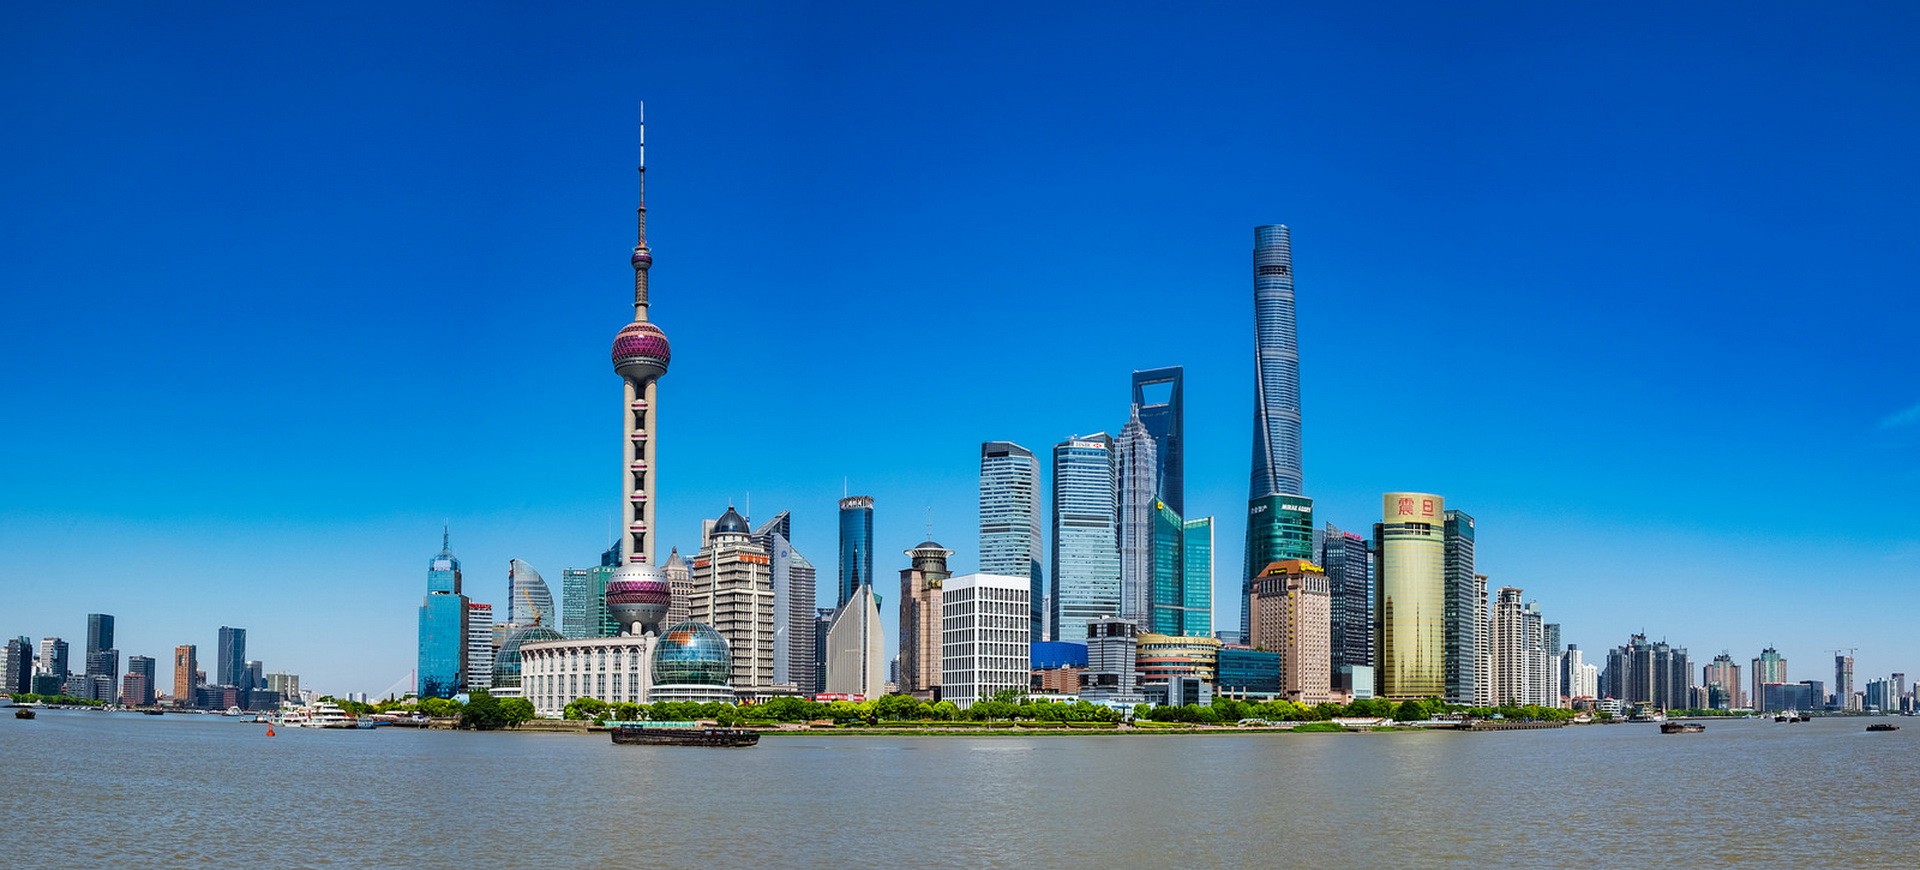 Skyline de Shanghai vu depuis le Bund